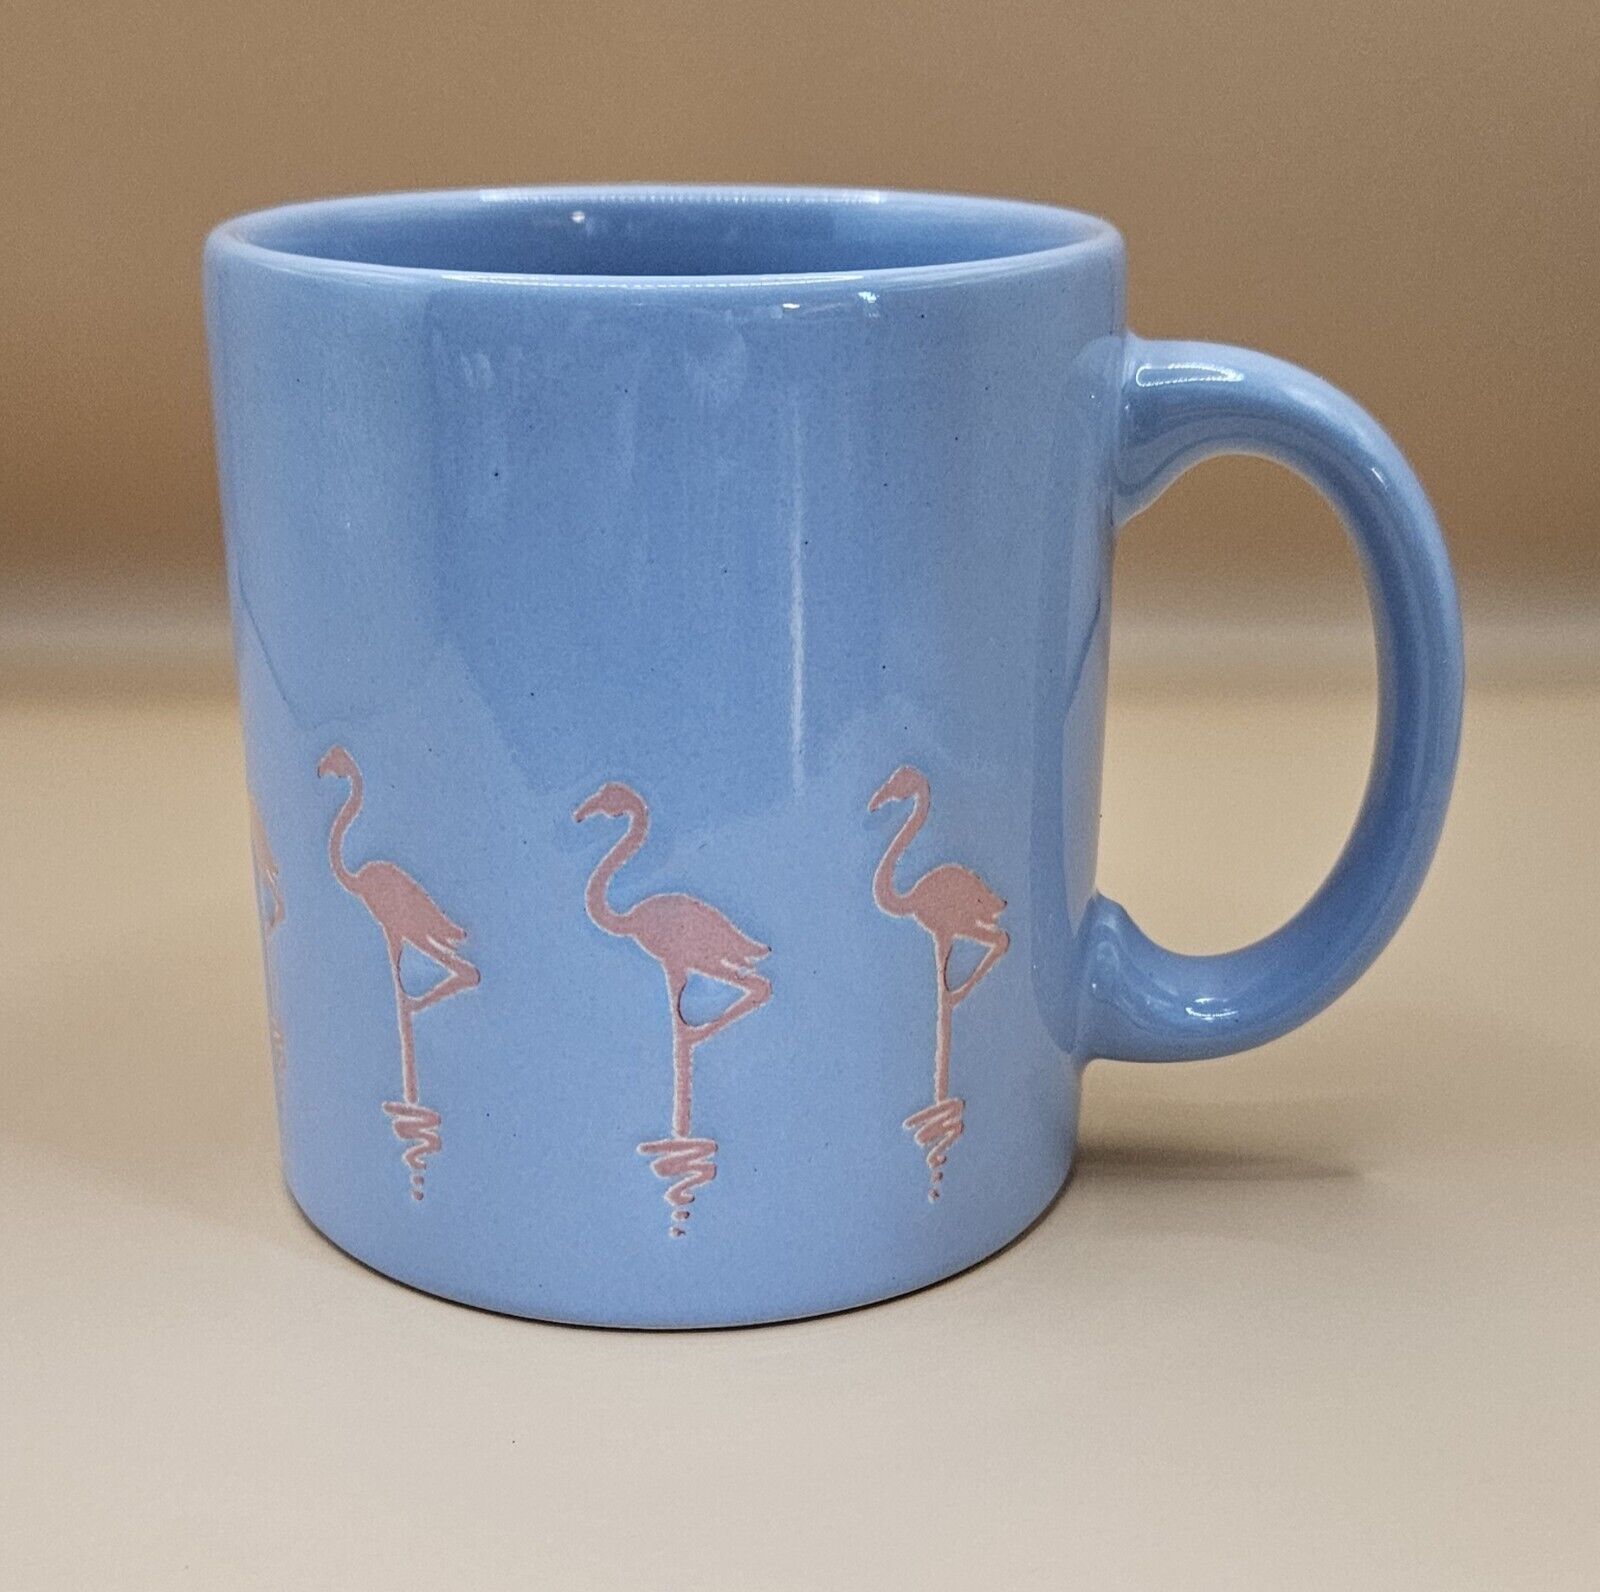 Vintage Waechtersbach W. Germany Blue Coffee Mug With Pink Flamingos Around Cup